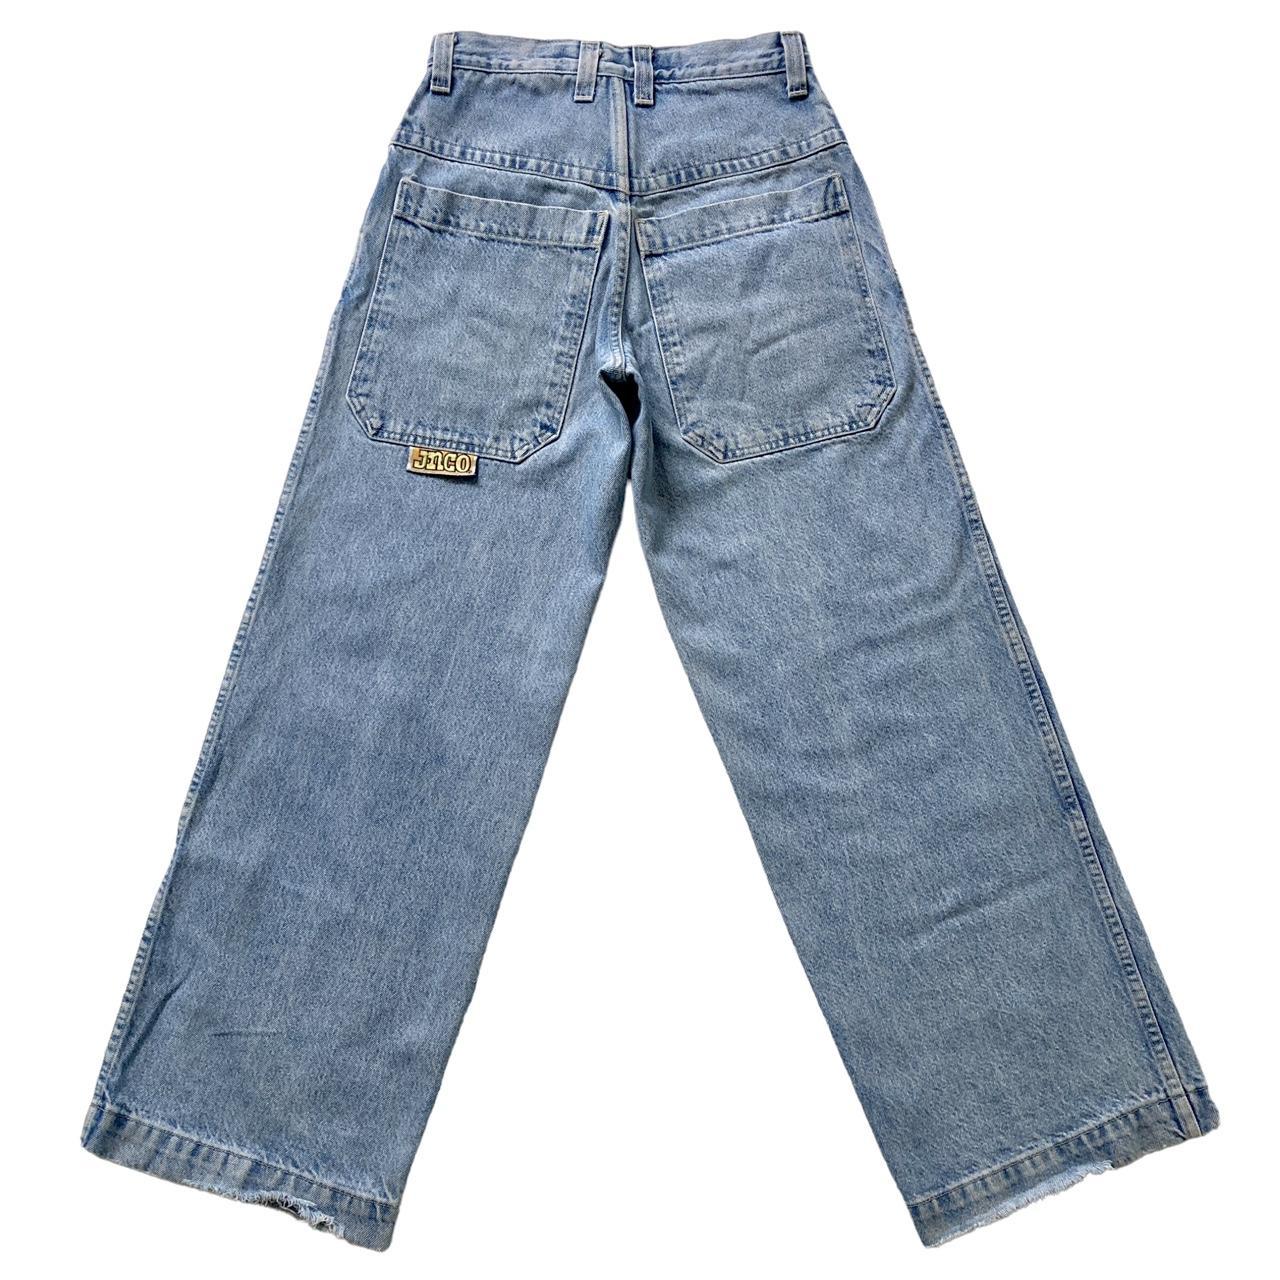 insane vintage 90s super wide leg jeans by JNCO ⭐️... - Depop